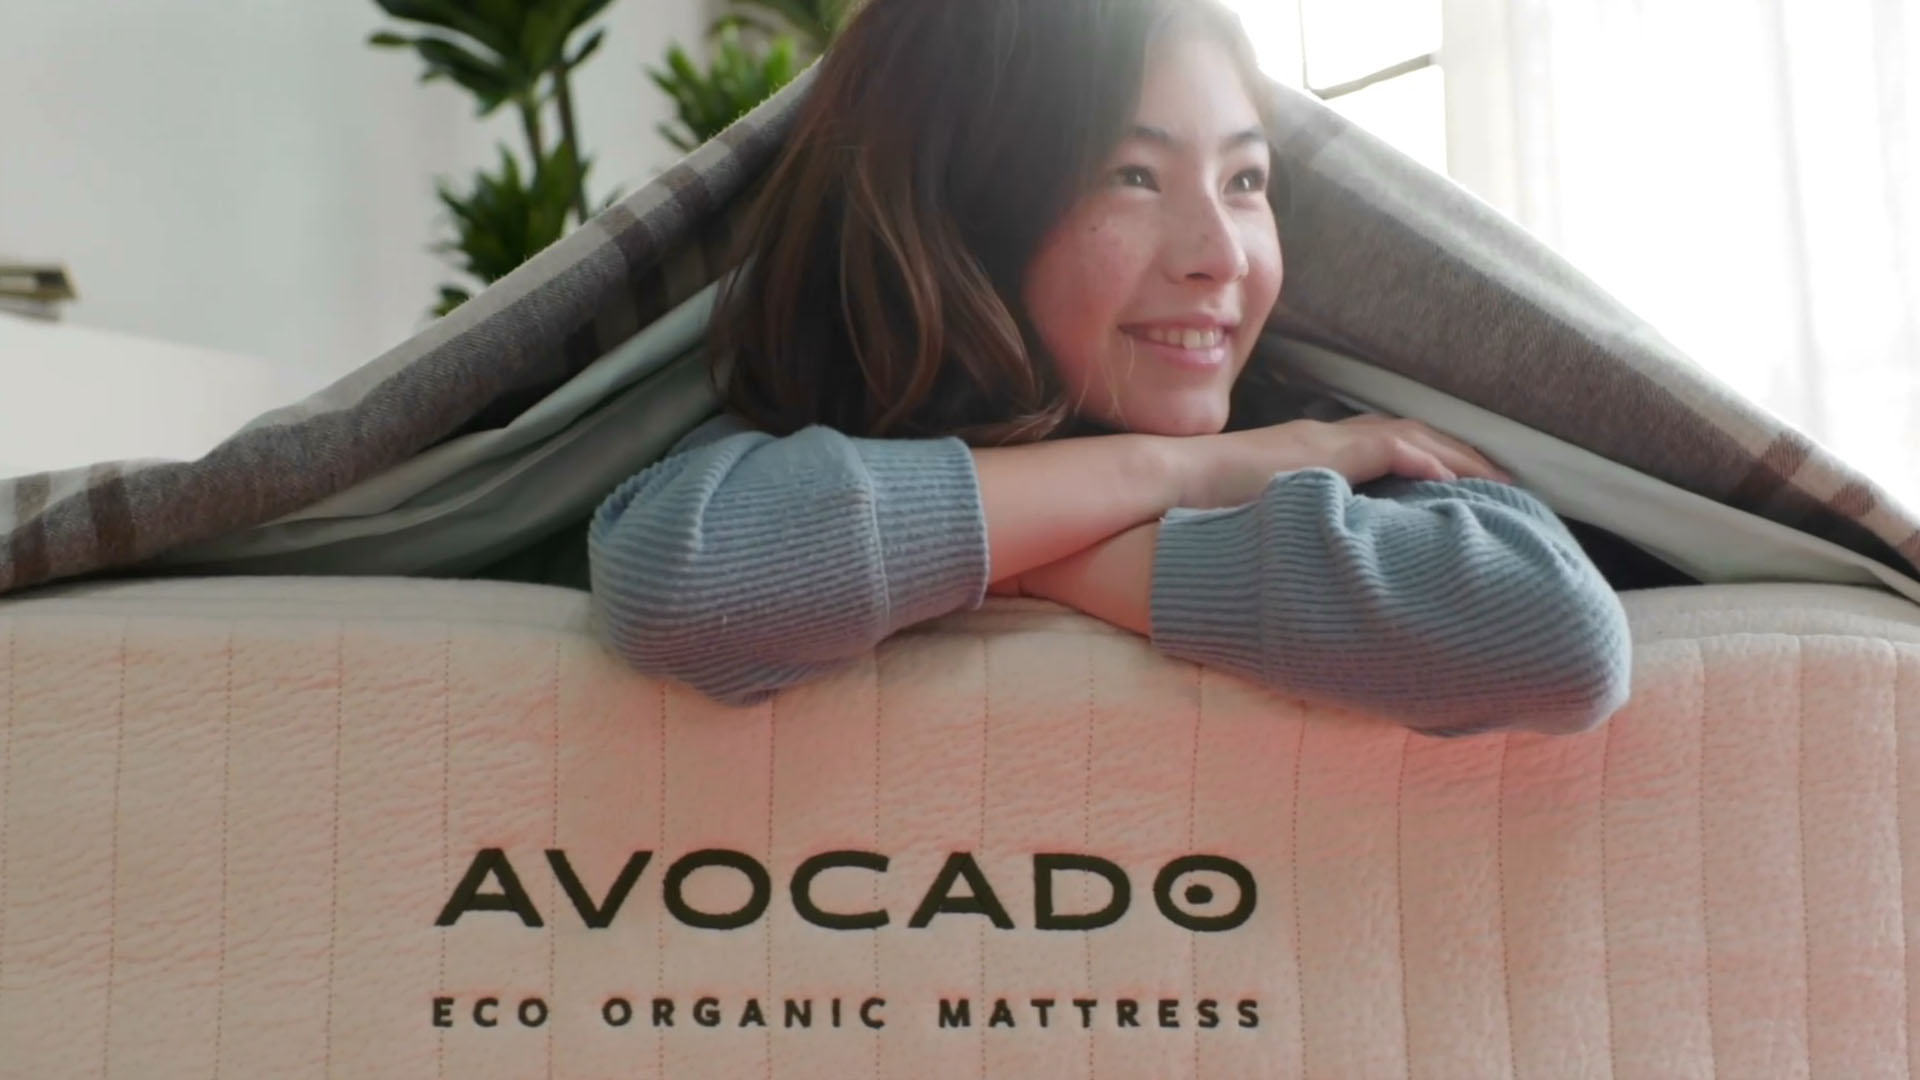 Who sells Avocado mattress near me in Midland